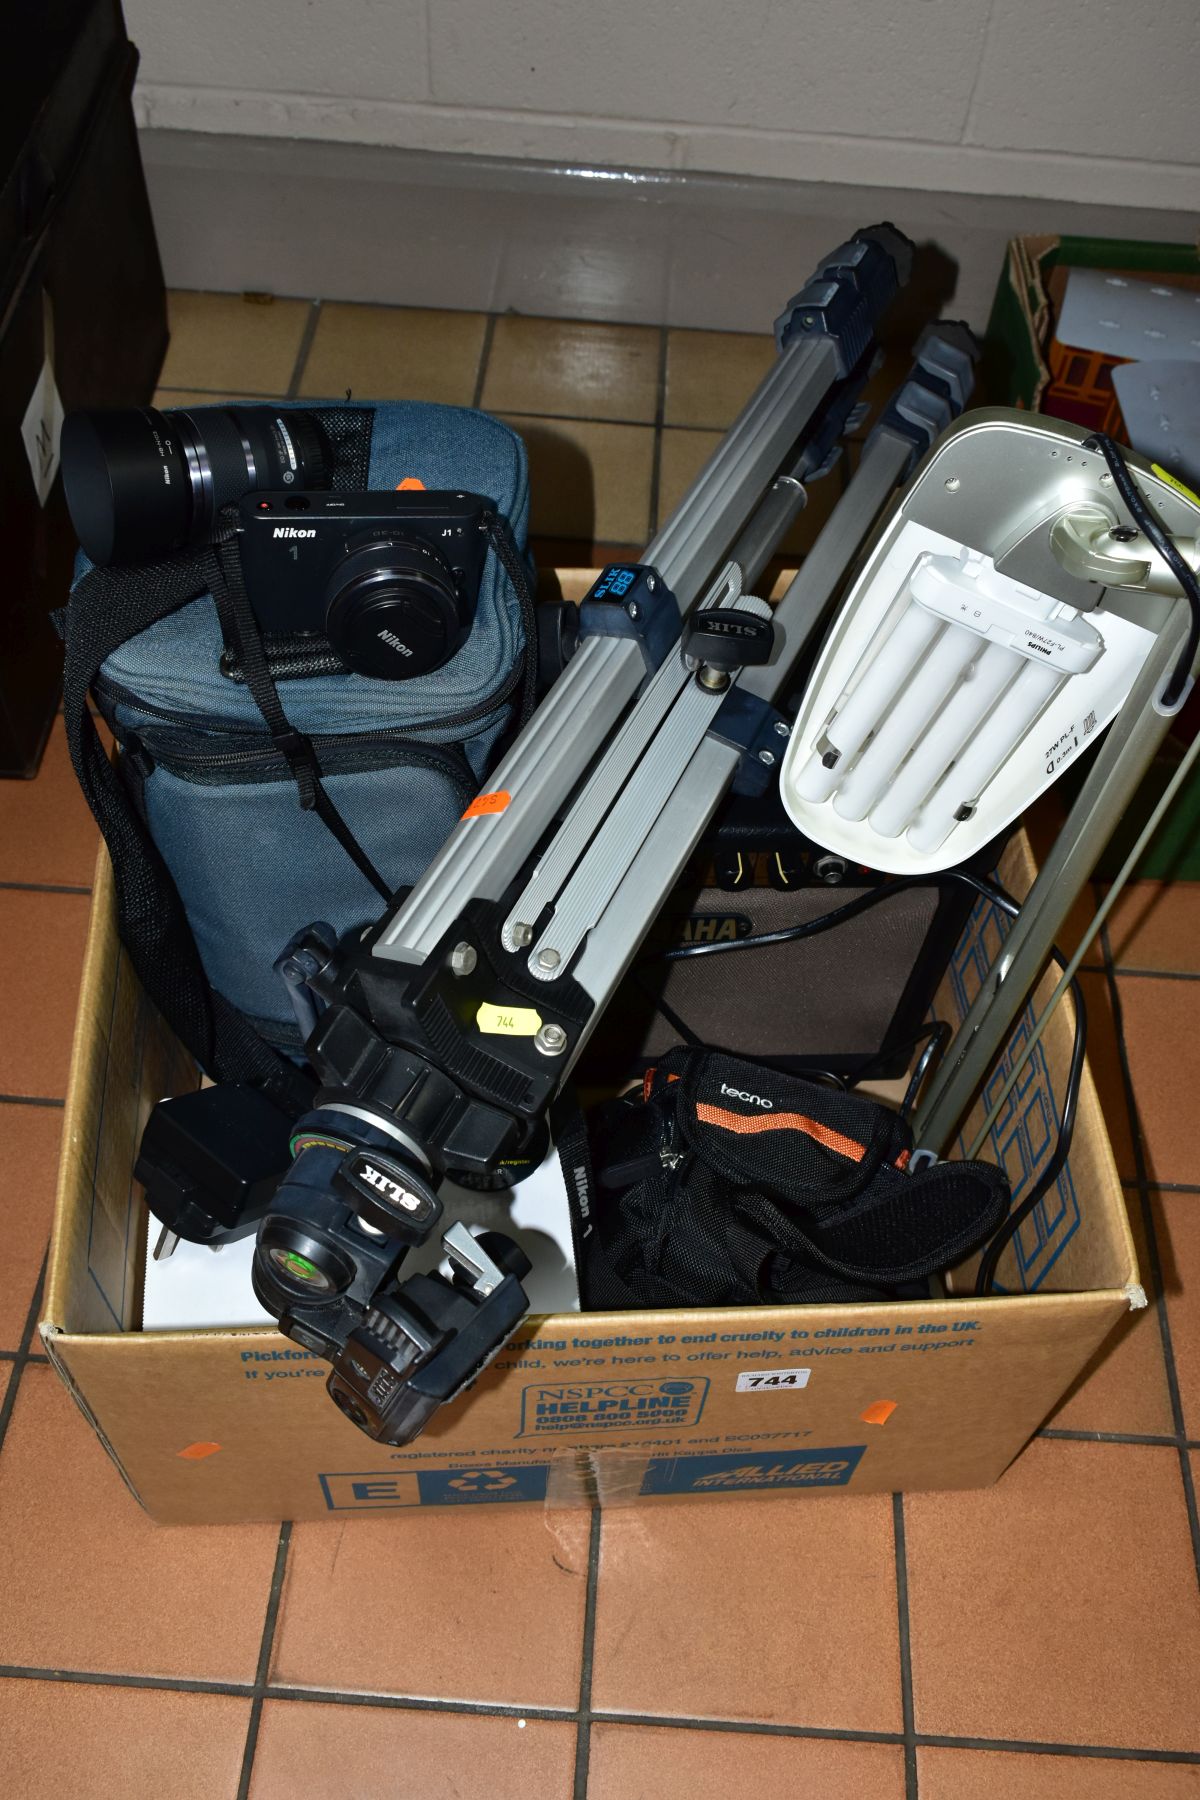 PHOTOGRAPHIC EQUIPMENT etc comprising a Nikon 1J1 mirrorless camera kit consisting of camera body